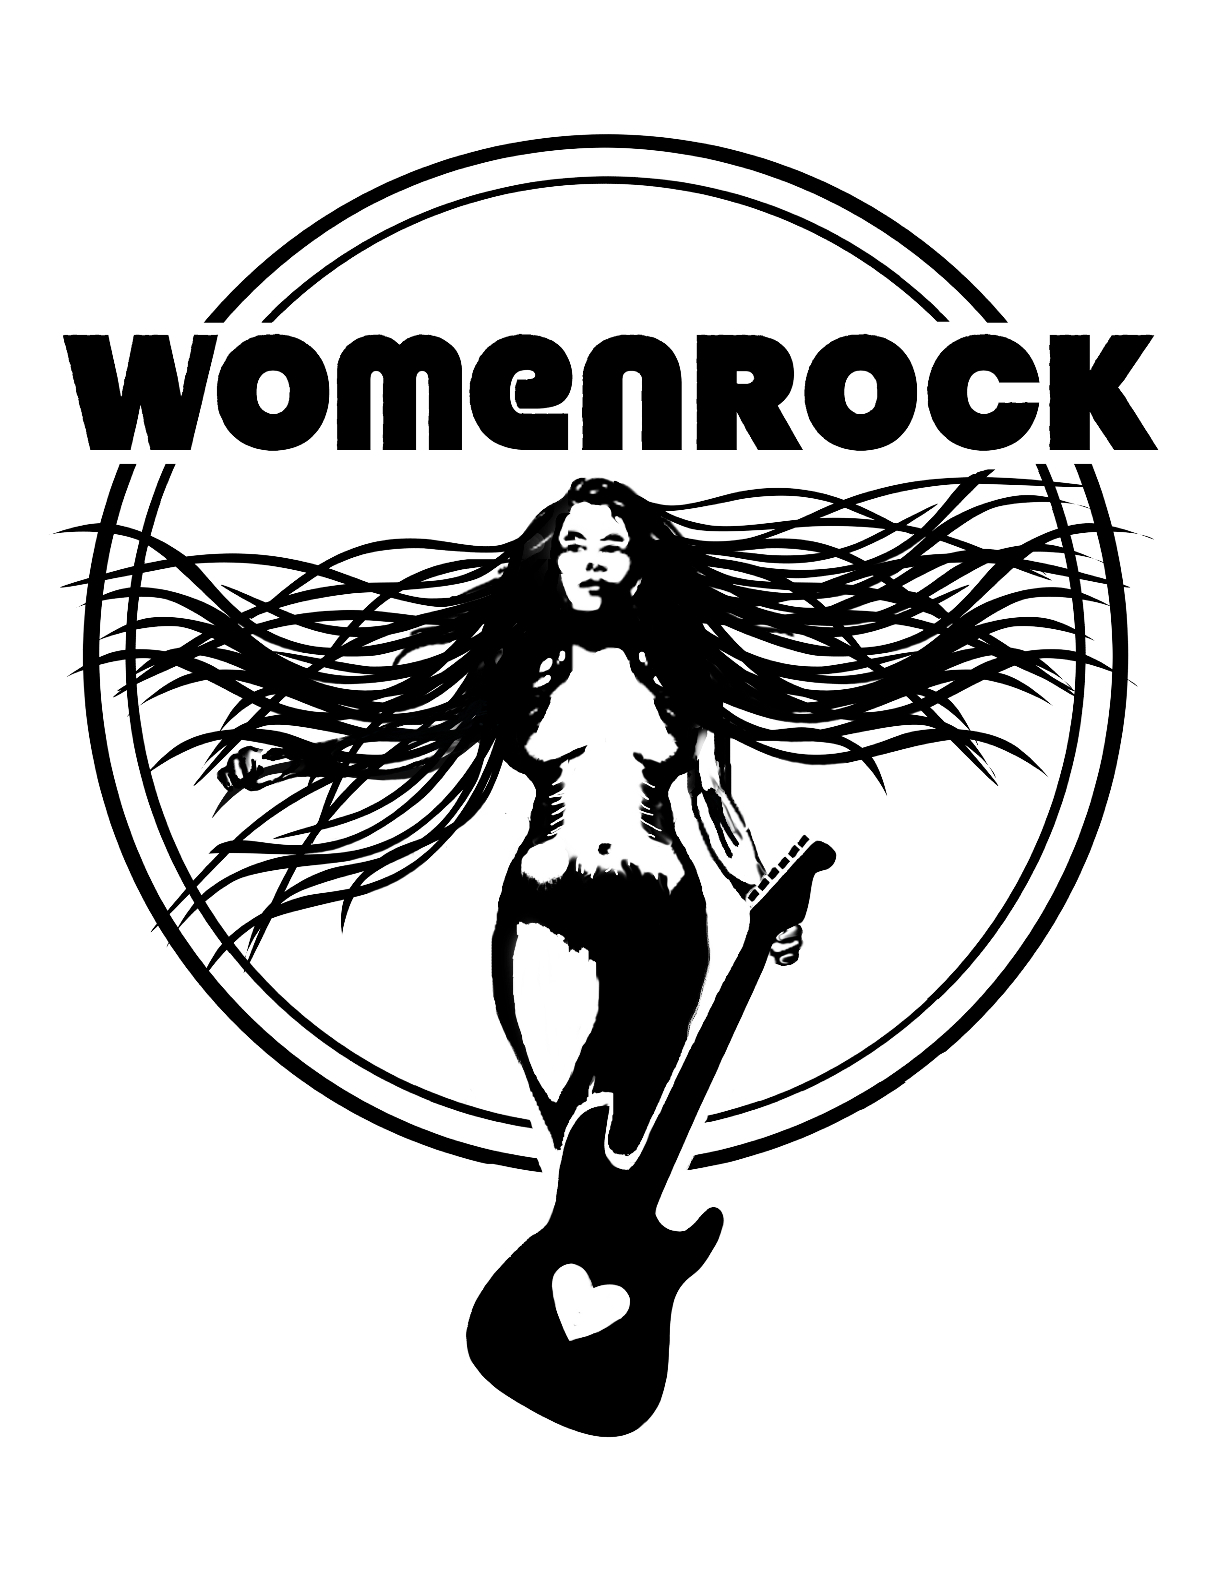 http://3.bp.blogspot.com/_BvBvZ_Fm2U4/SZTIbG_8PEI/AAAAAAAAAAM/GCfXSHlaS0Y/s1600/WomanRock_logo.jpg